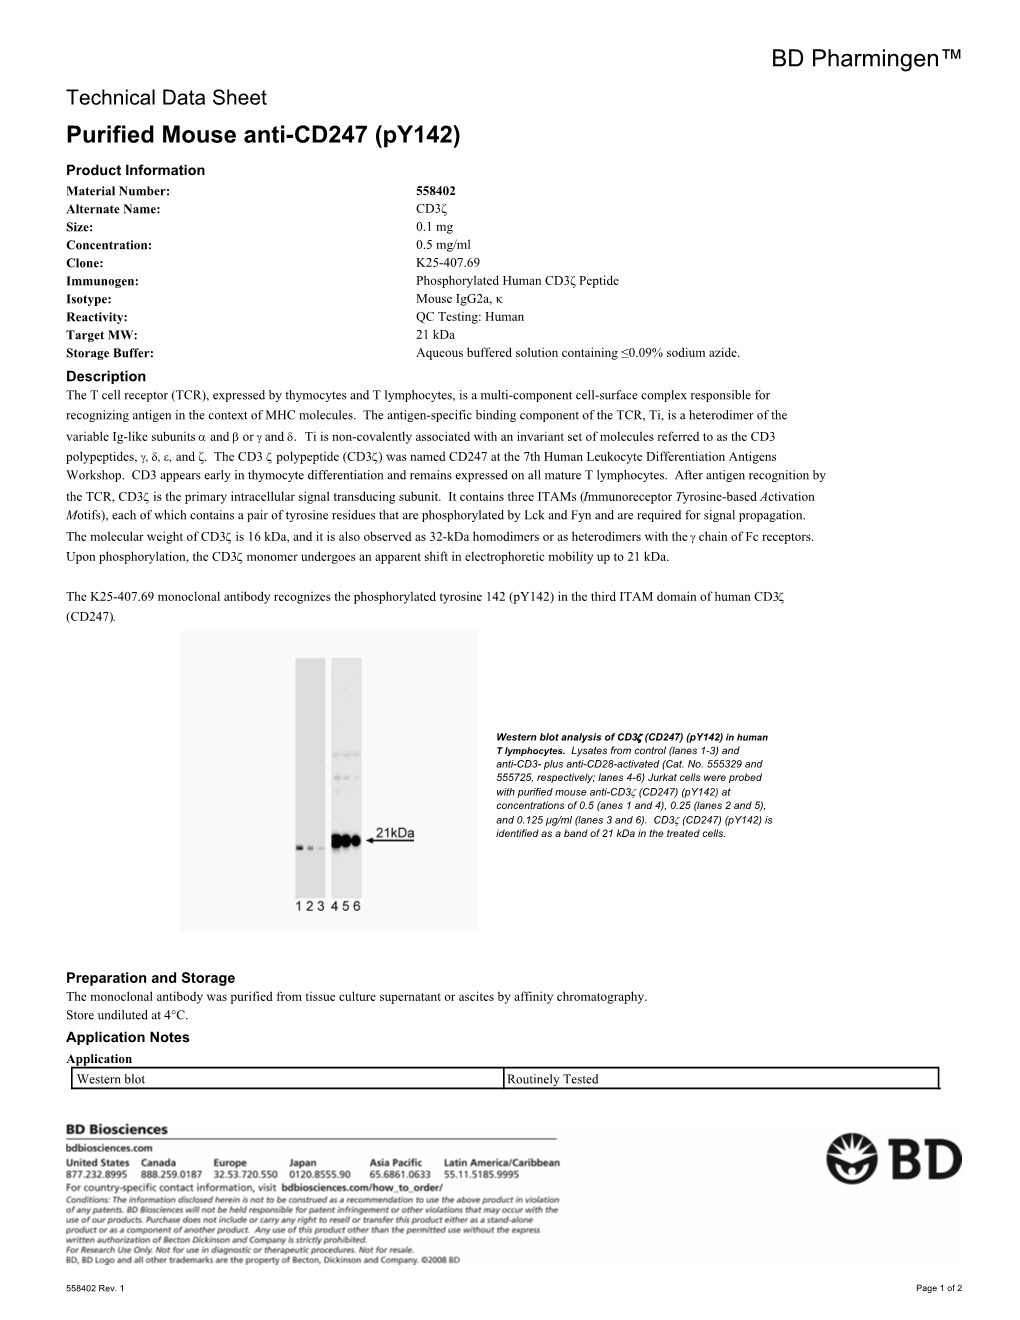 BD Pharmingen™ Purified Mouse Anti-CD247 (Py142)